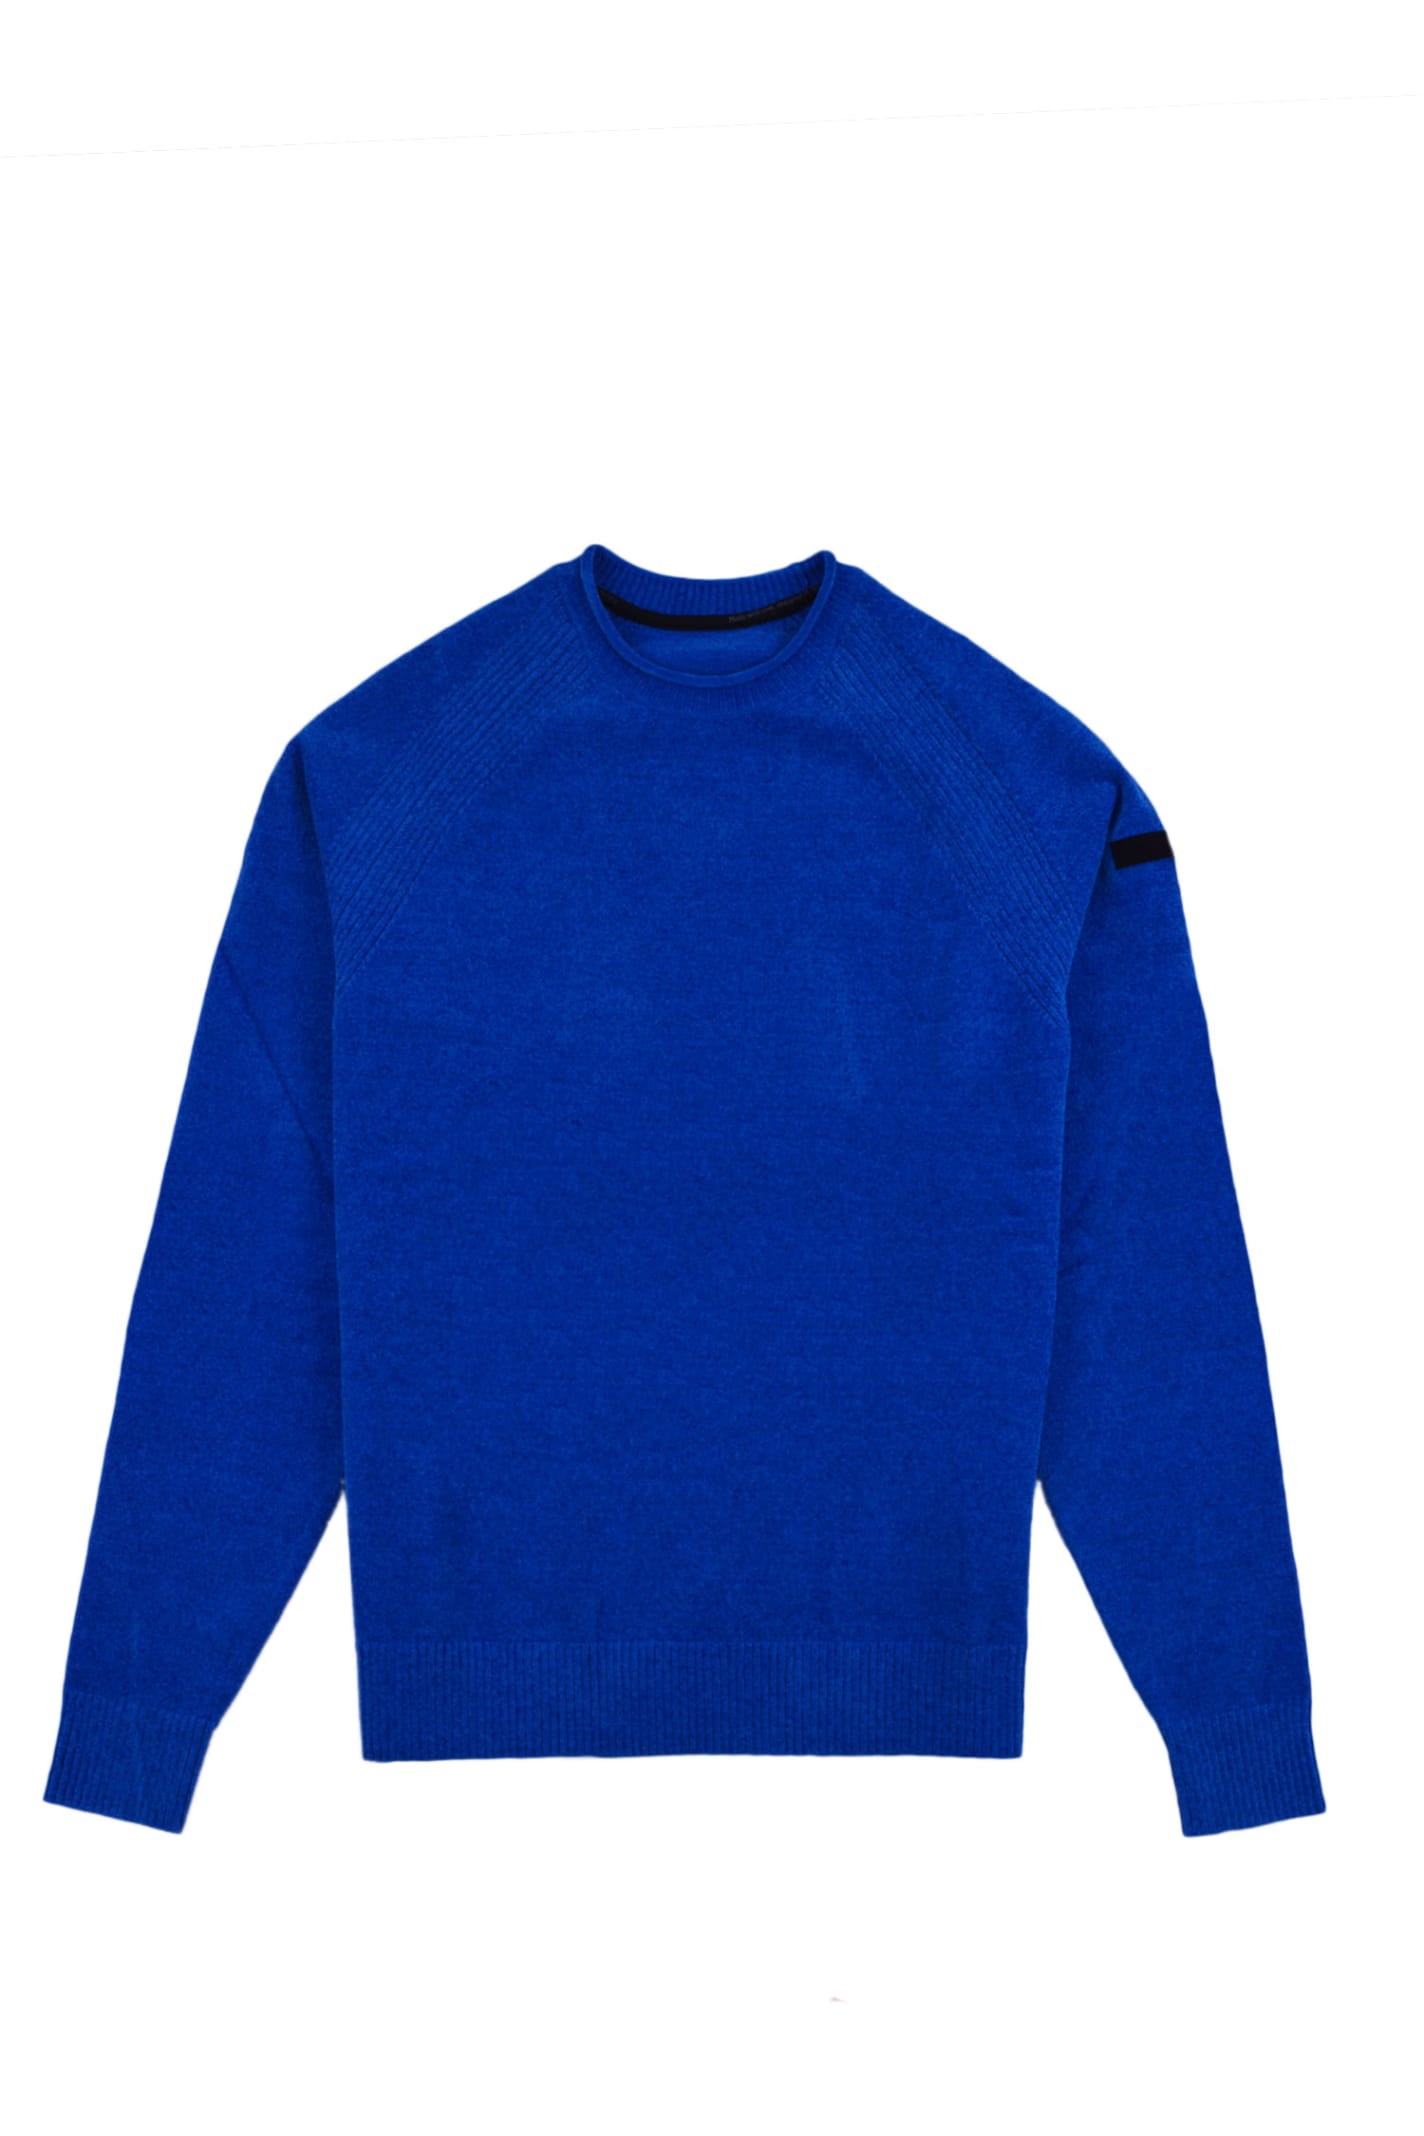 Rrd - Roberto Ricci Design Sweater In Blu Royal